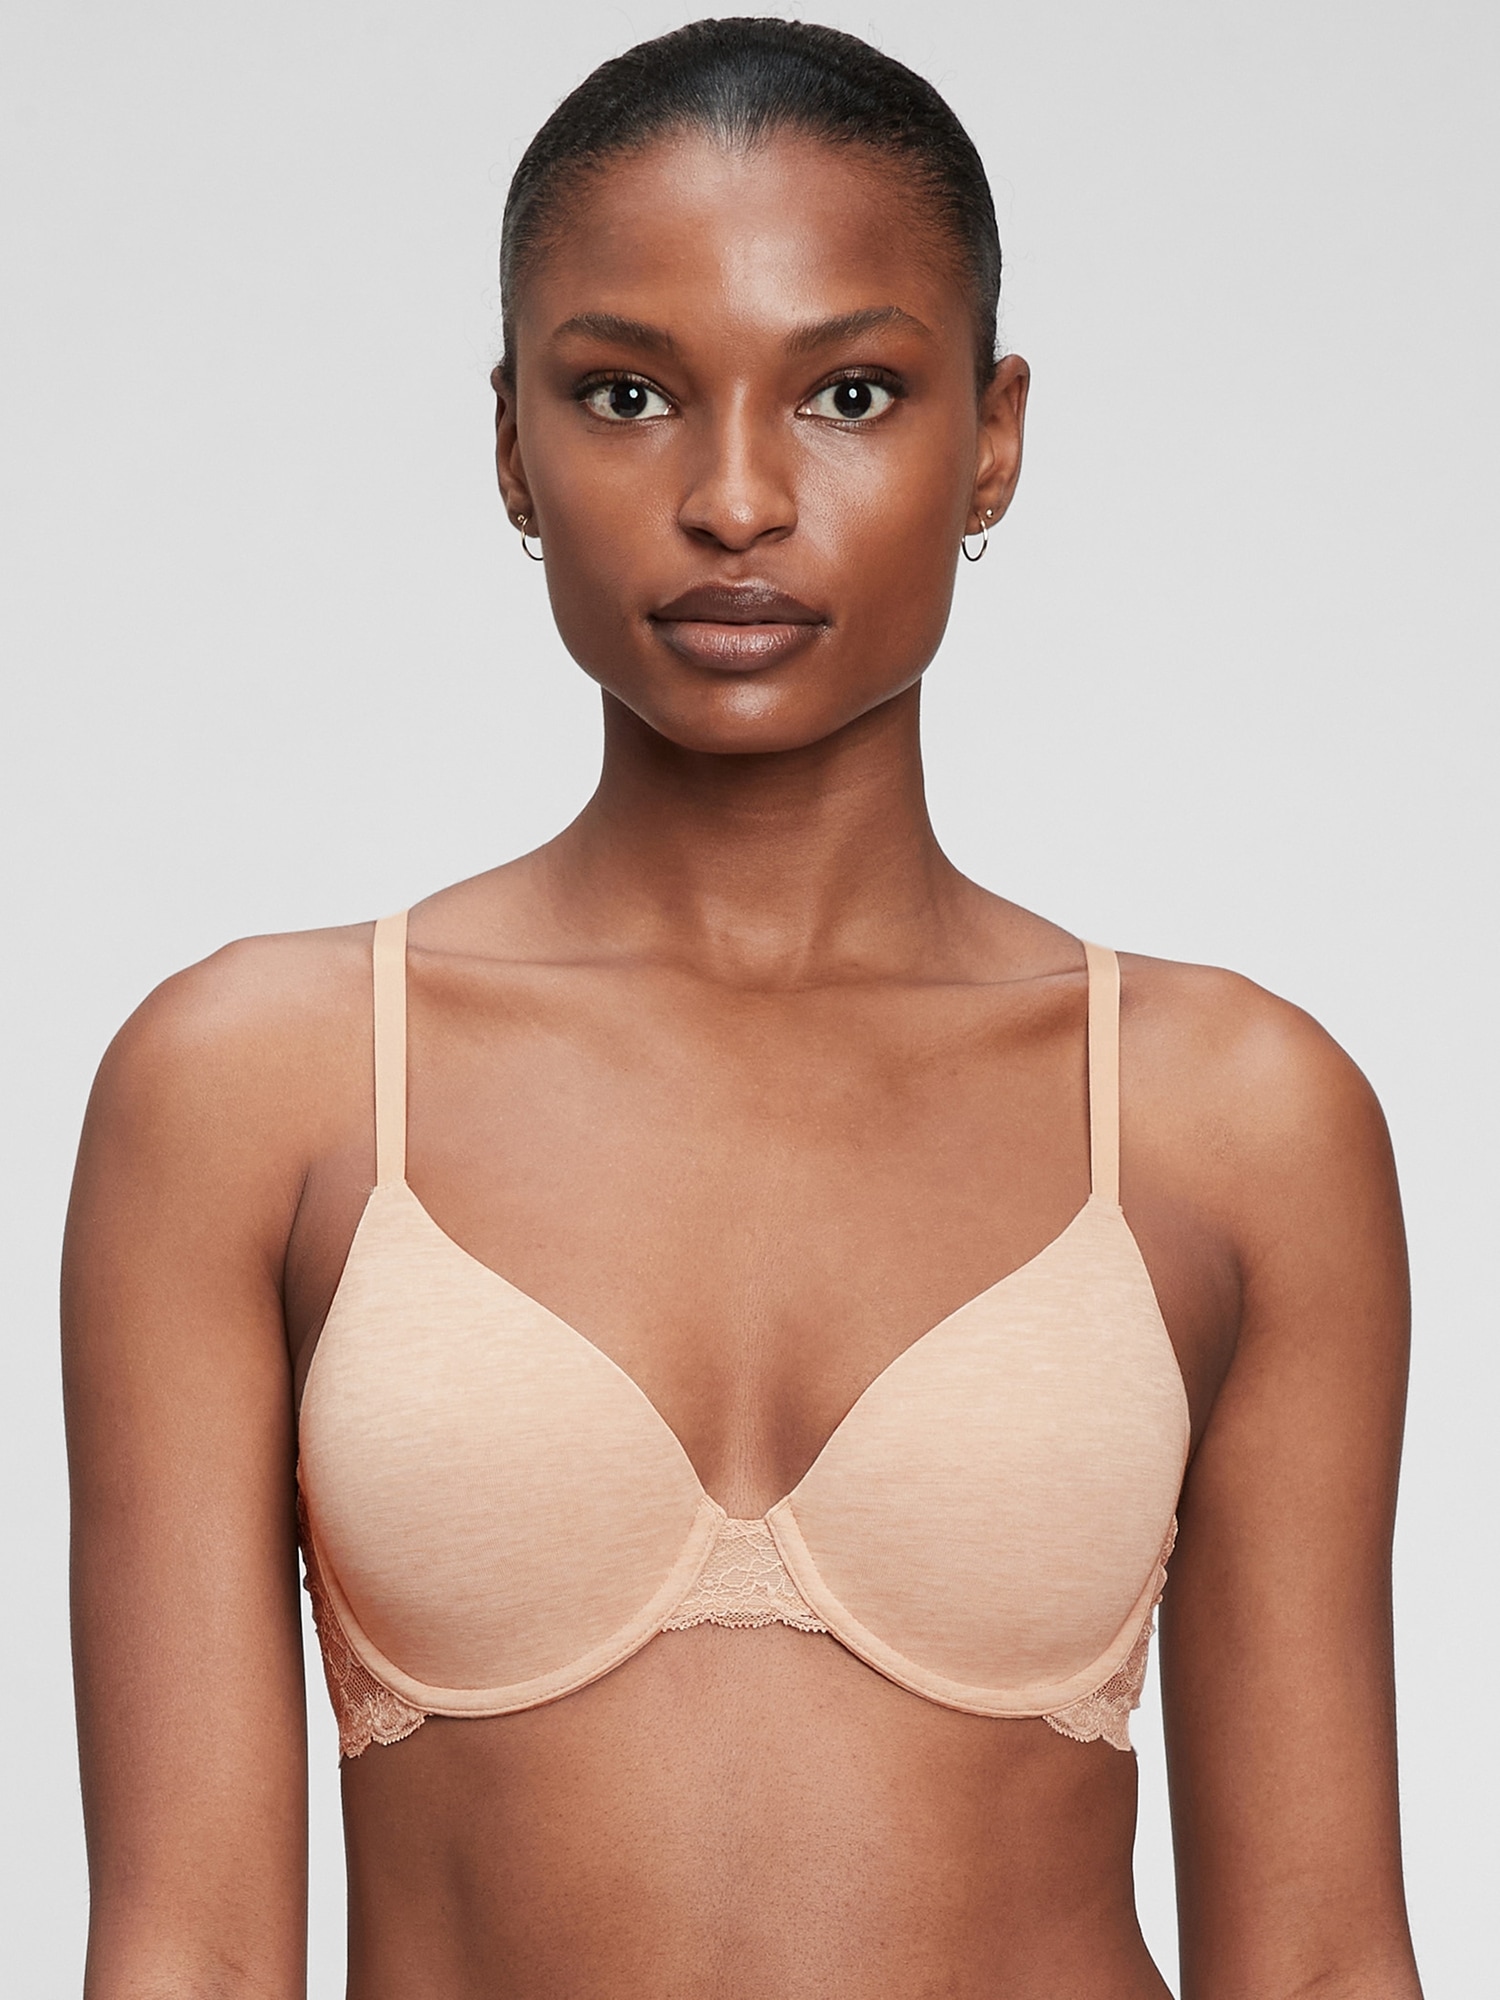 Body by Victoria Perfect Shape Underwire Bra - Black Tan Lace Overlay -  Size 38C